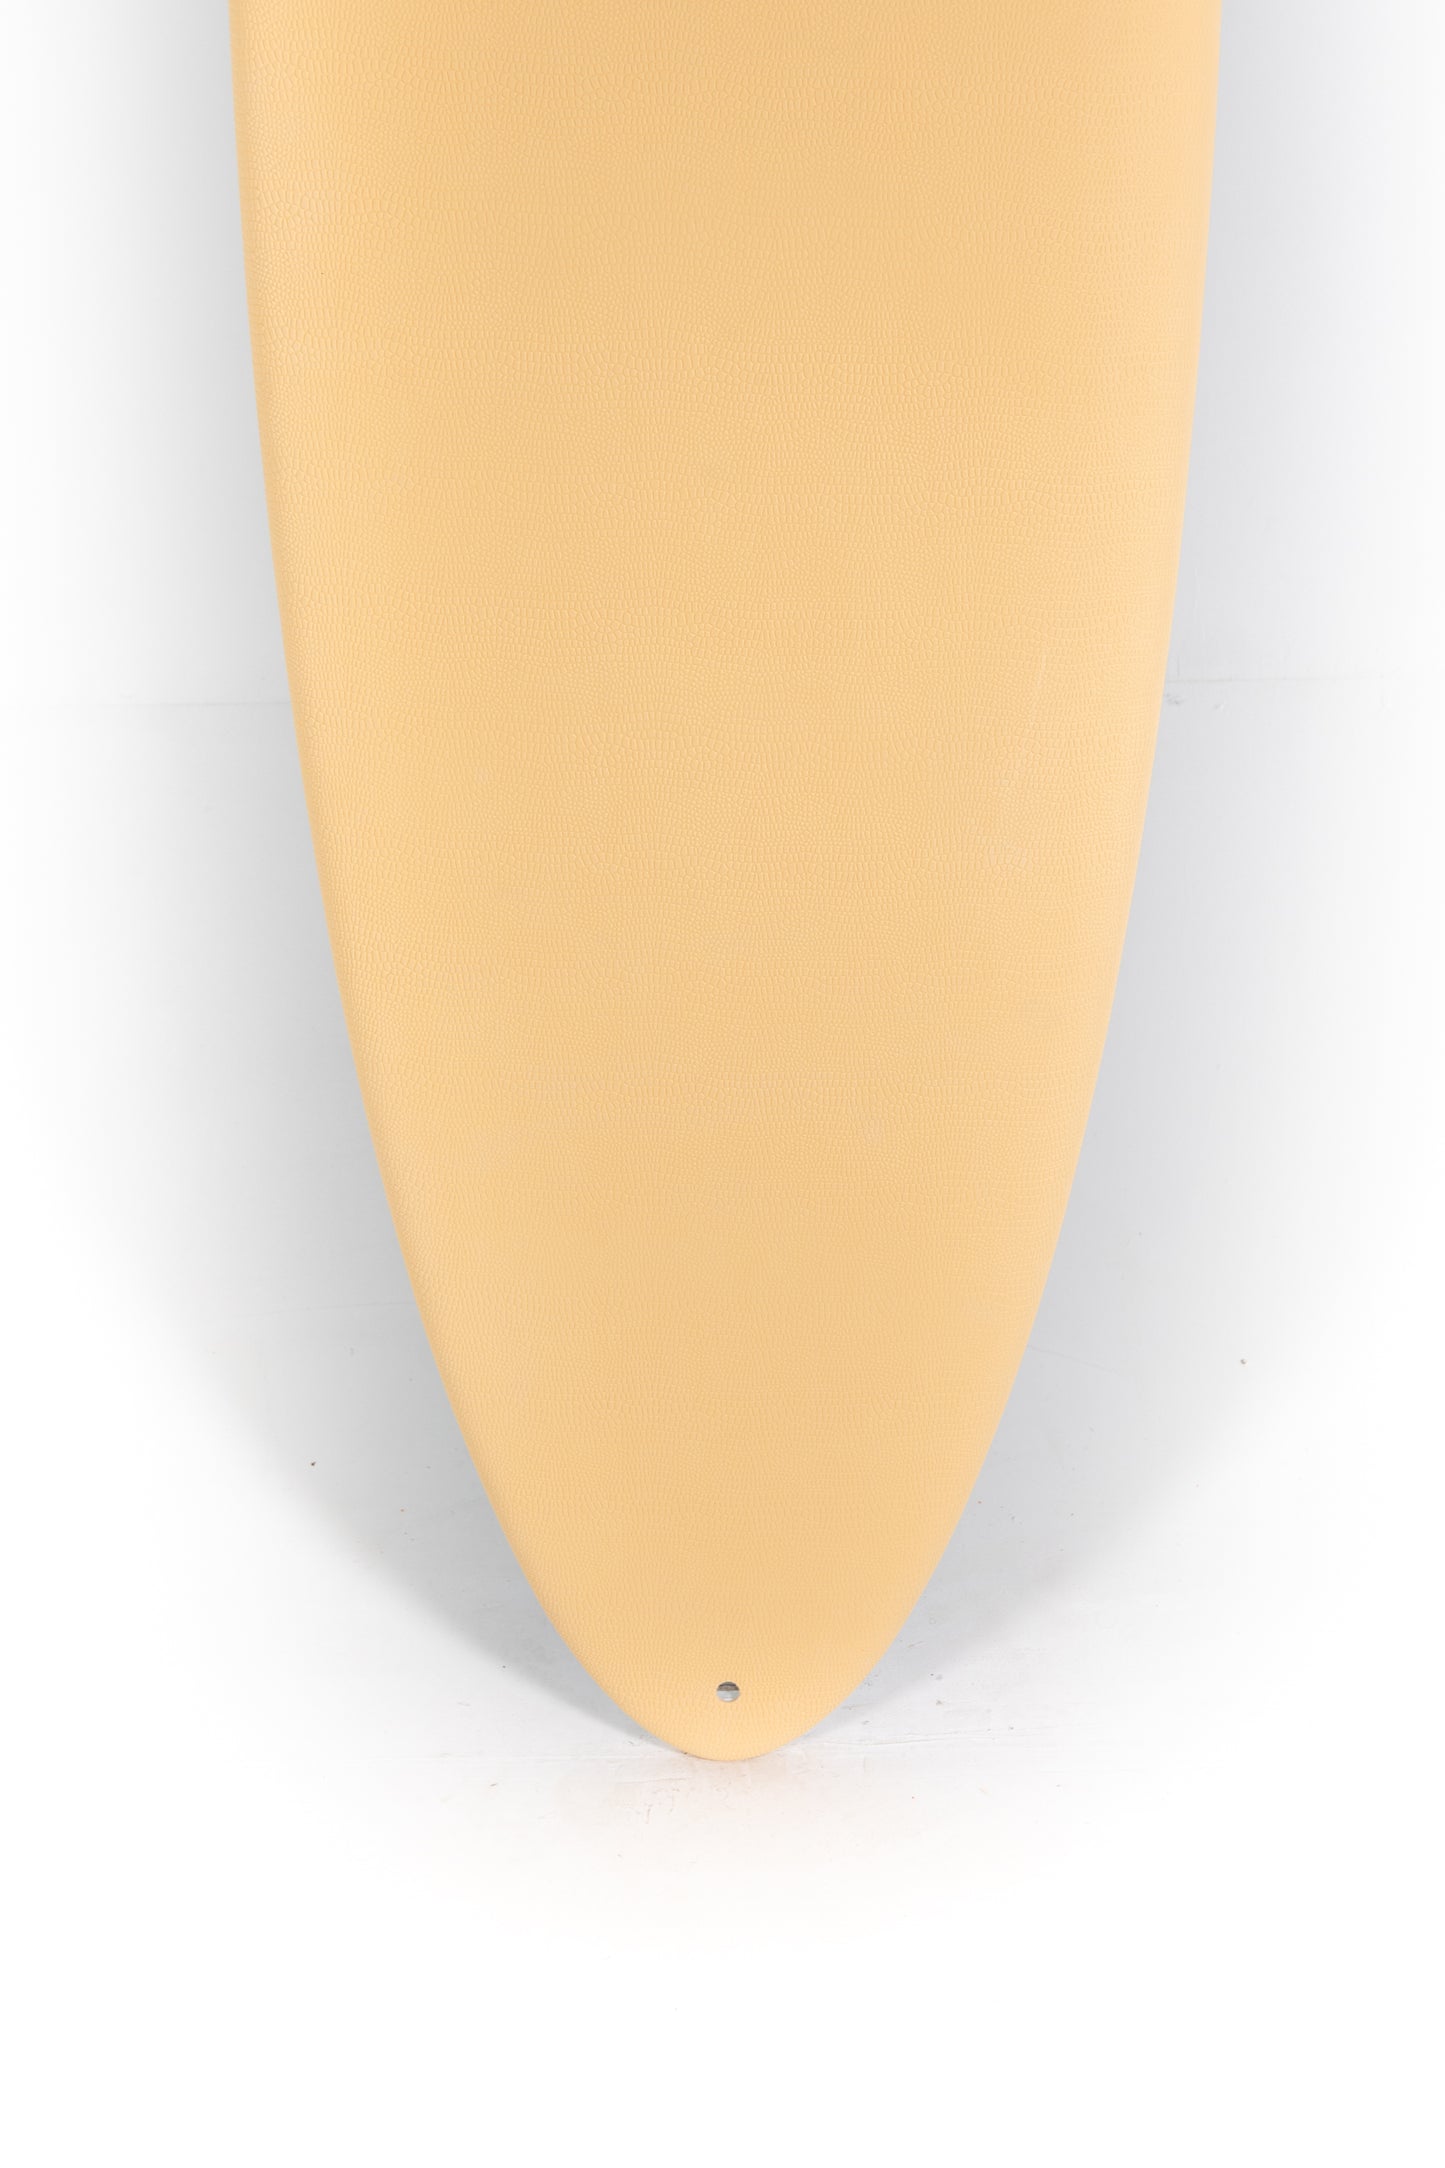 
                  
                    Pukas-Surf-Shop-Indio-Surfboards-Racer-Ye-6_8
                  
                